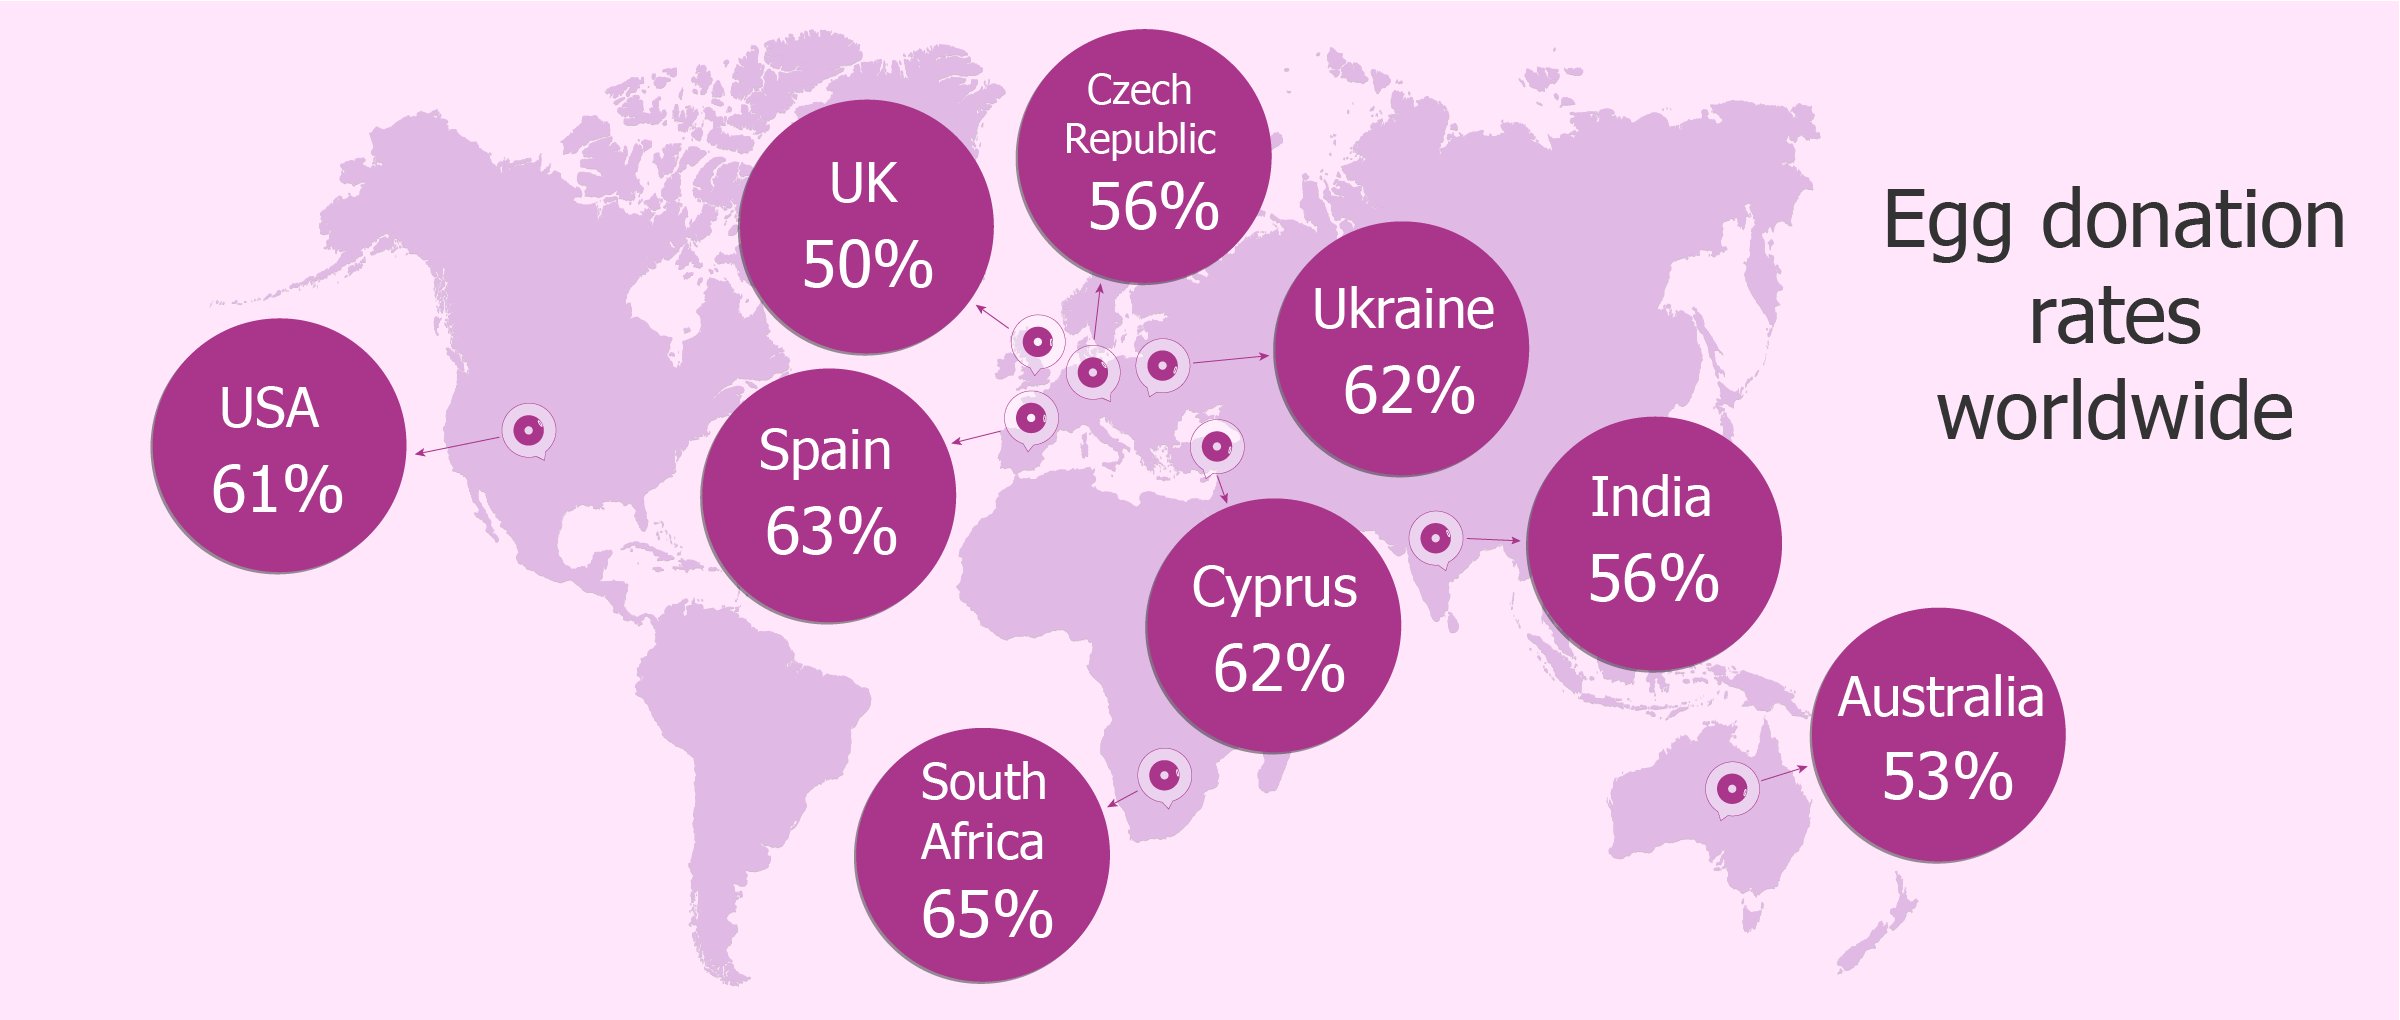 Egg donation rates worldwide map